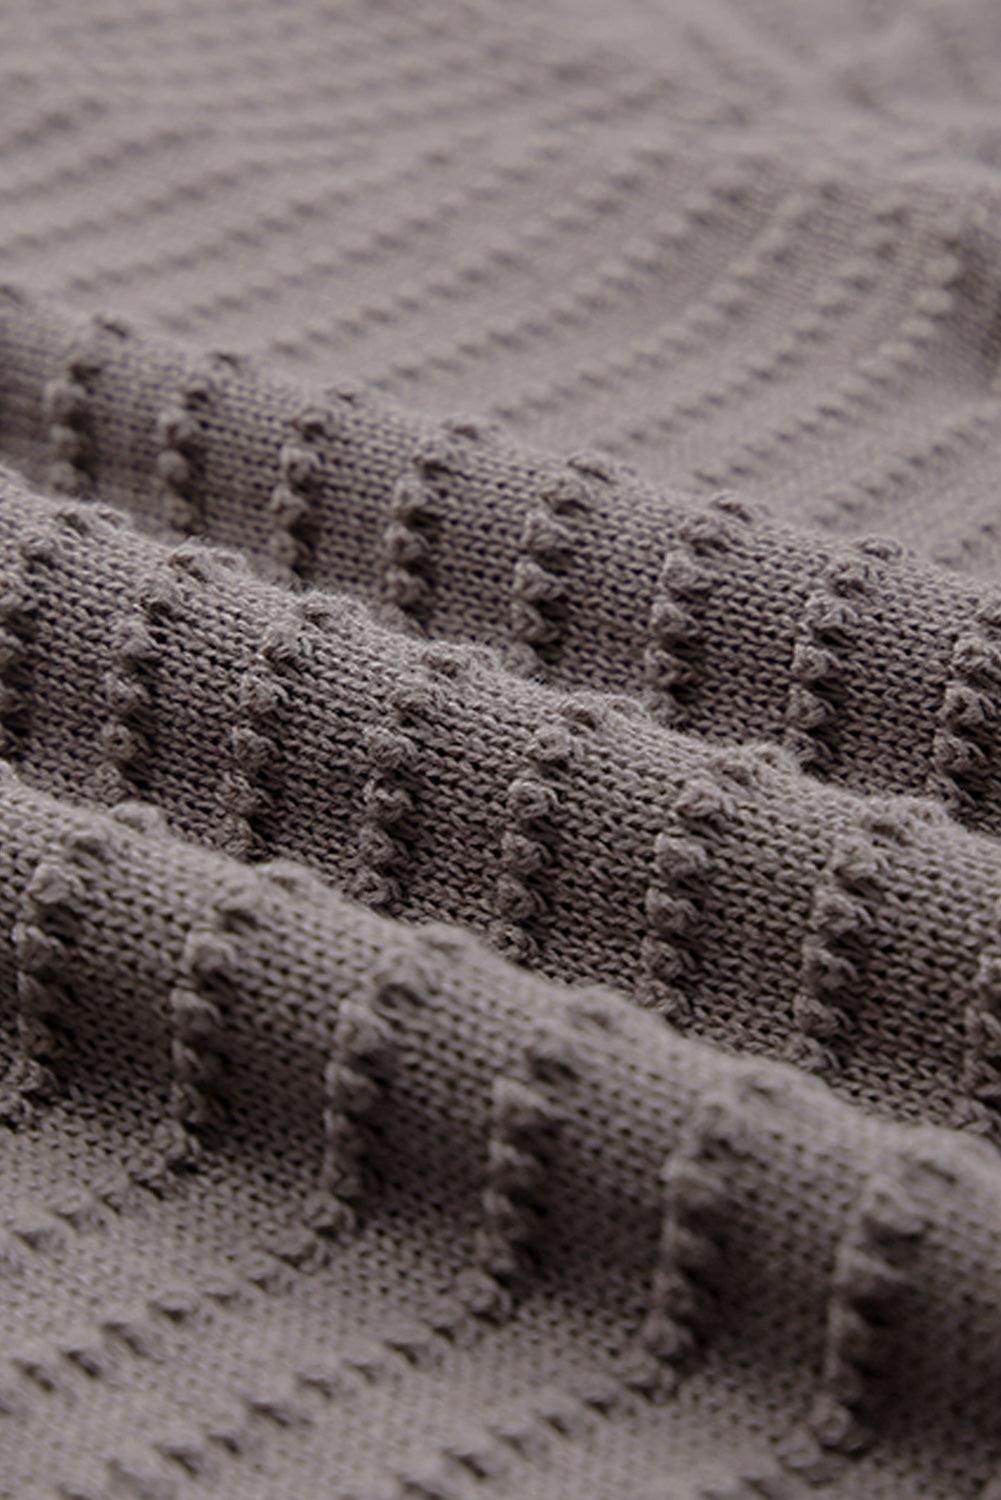 Gray Textured Knit Round Neck Dolman Sleeve Sweater - L & M Kee, LLC